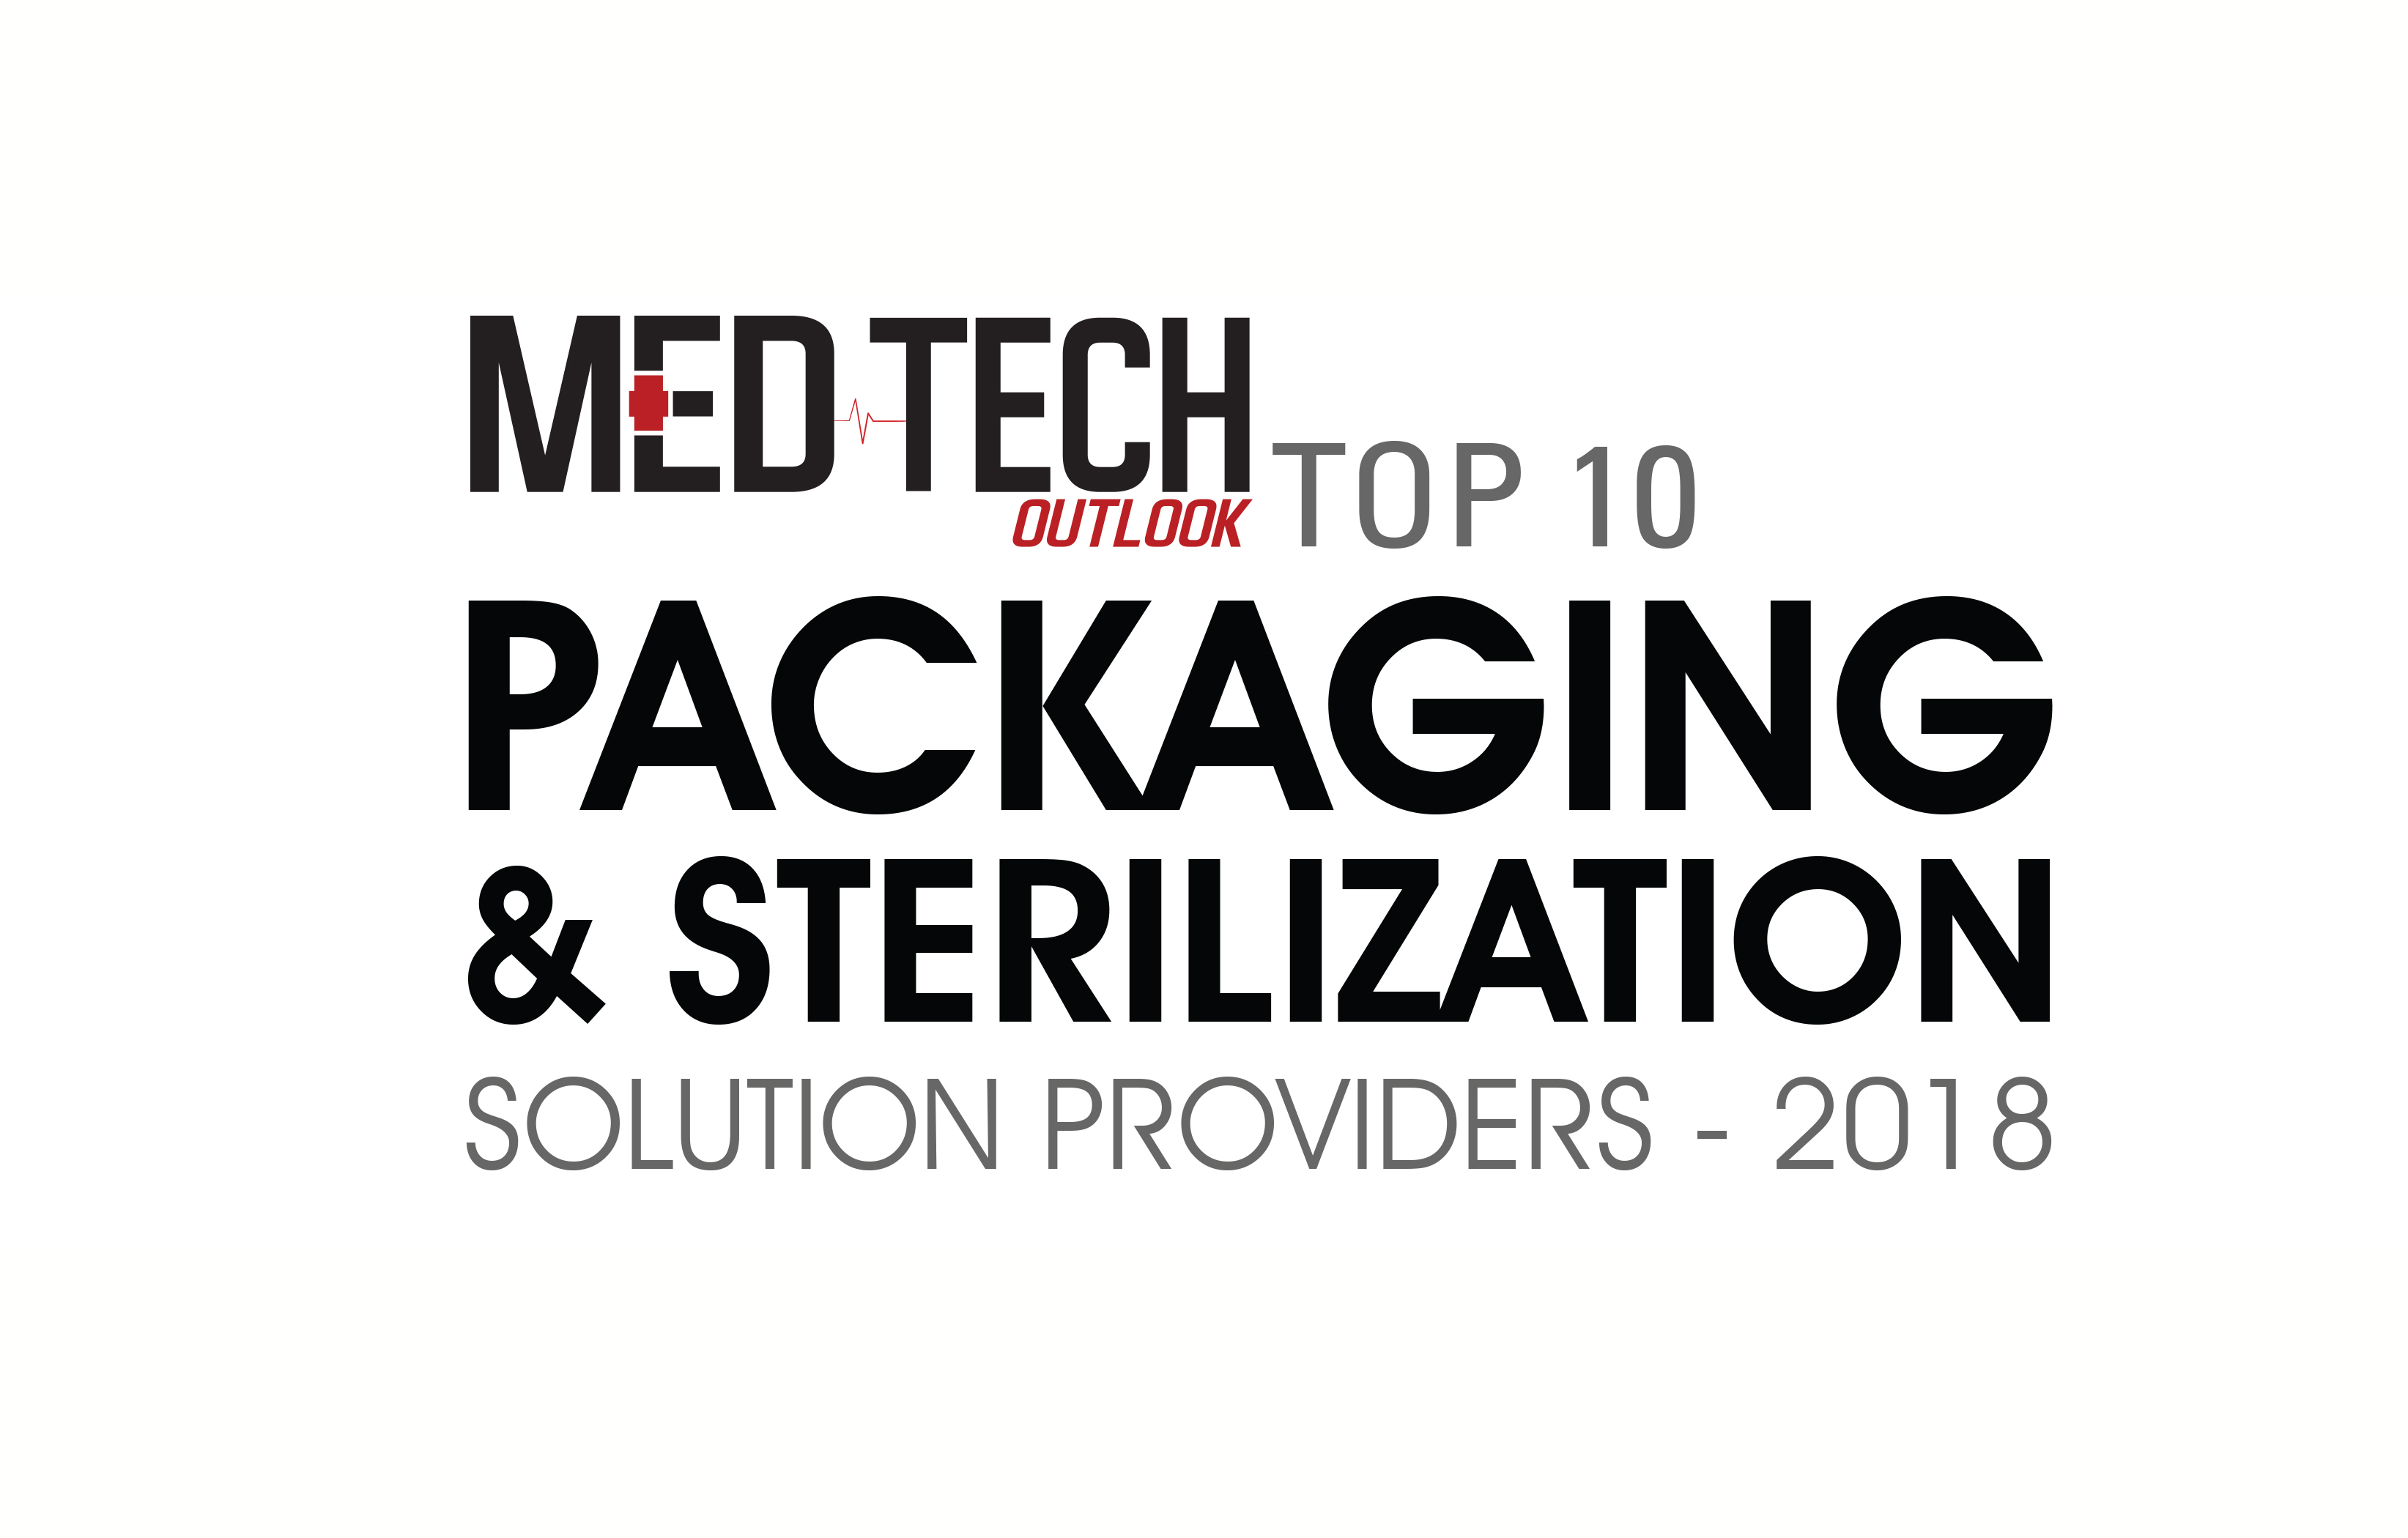 TOP TEN Packaging & Sterilization Award to New-Tech